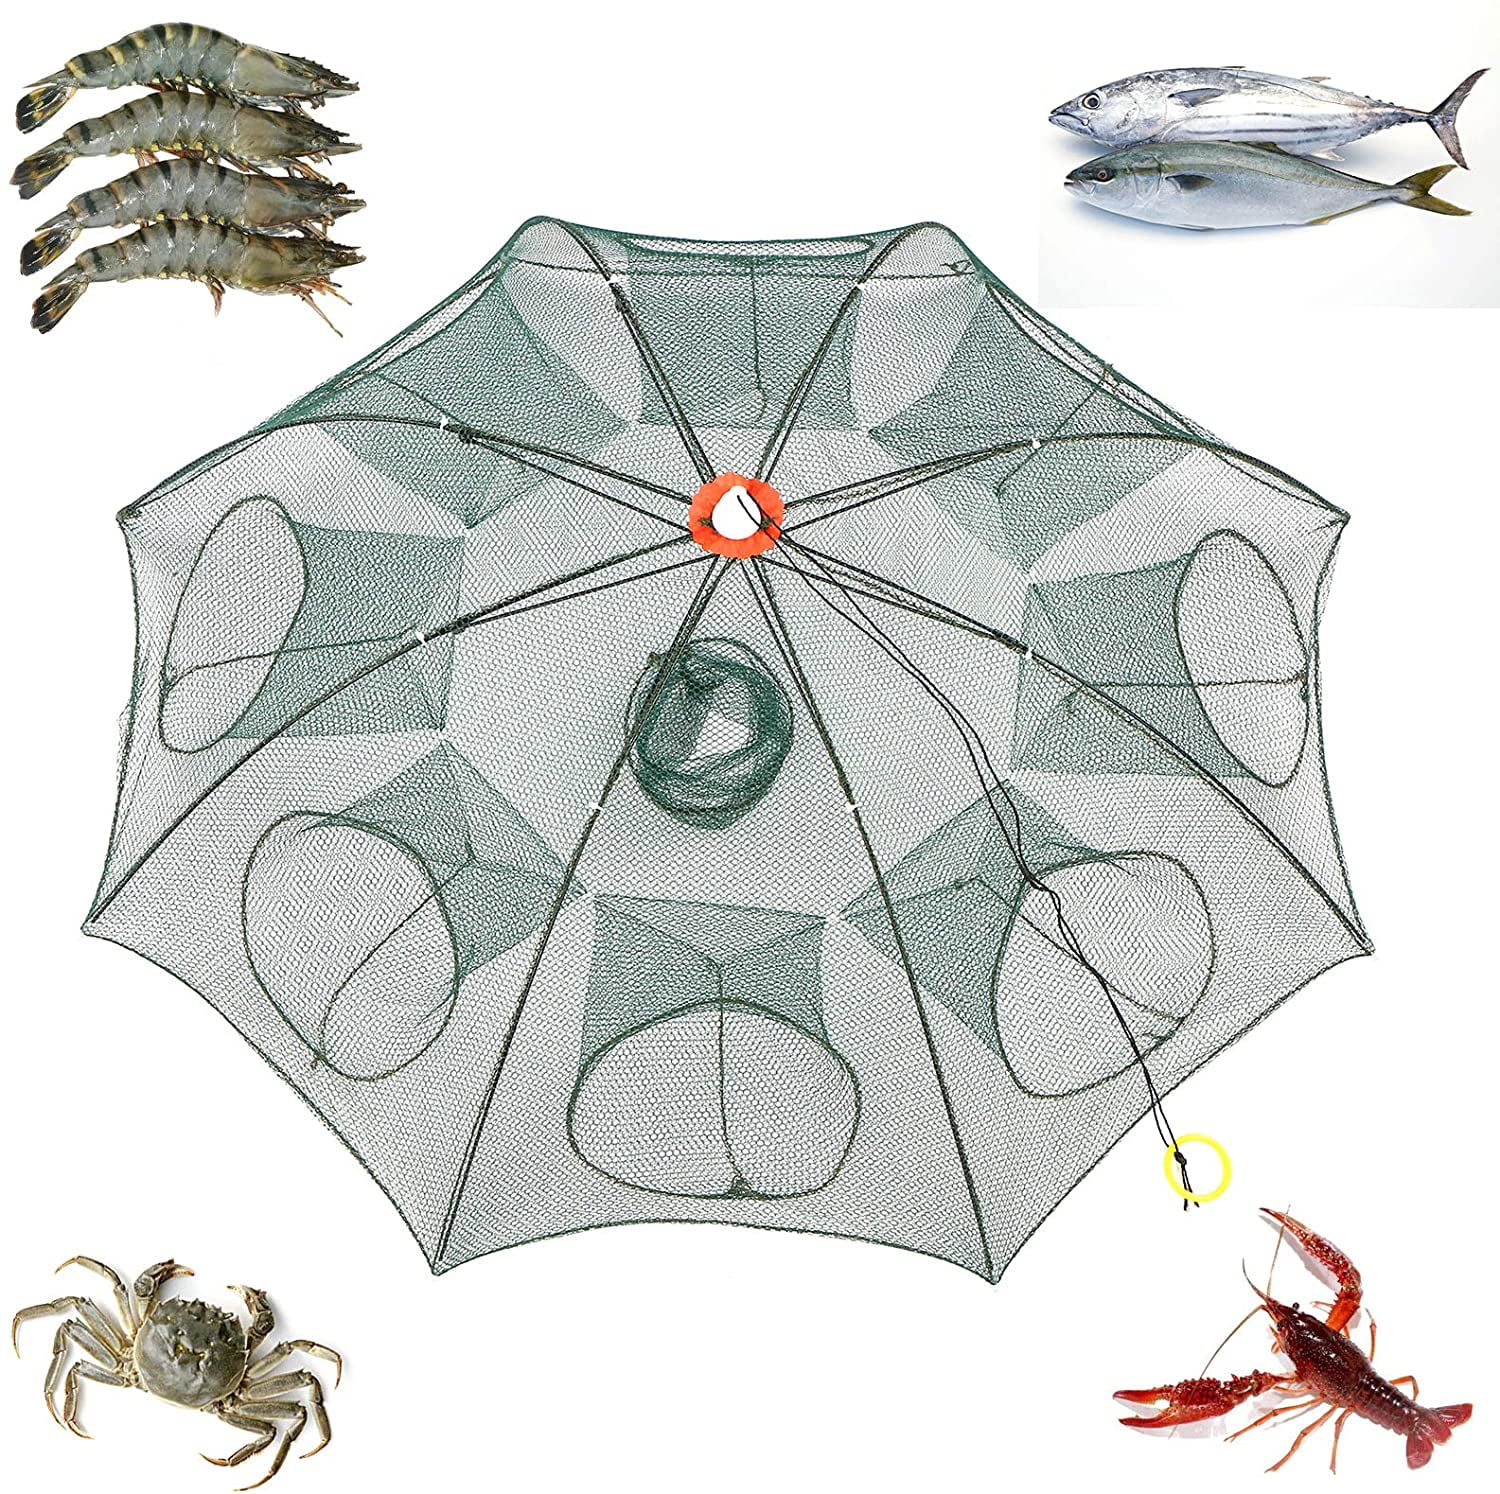 Commercial Foldable Trap Lobster Shrimp Crab Fish Crawfish Bait Cage Net Fishing 